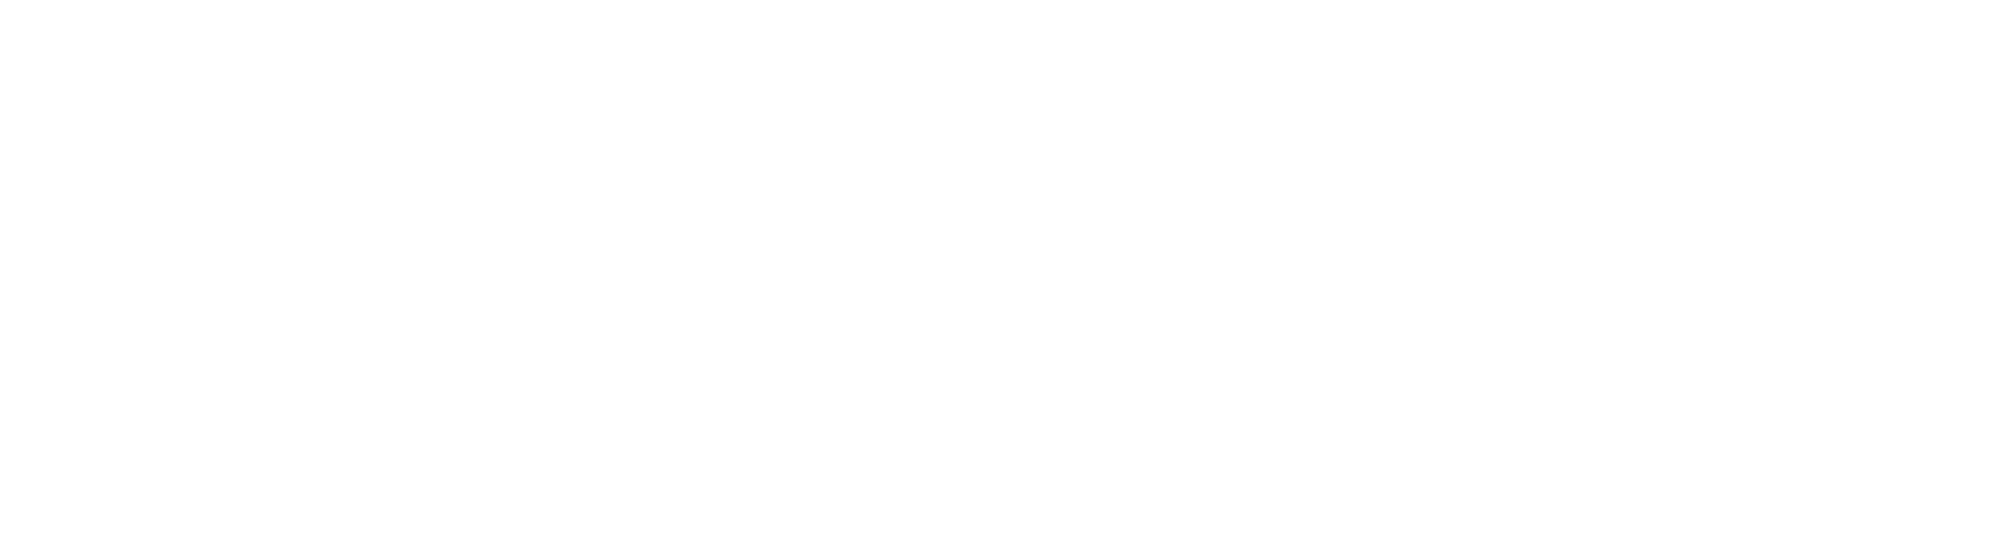 Cassandro logo